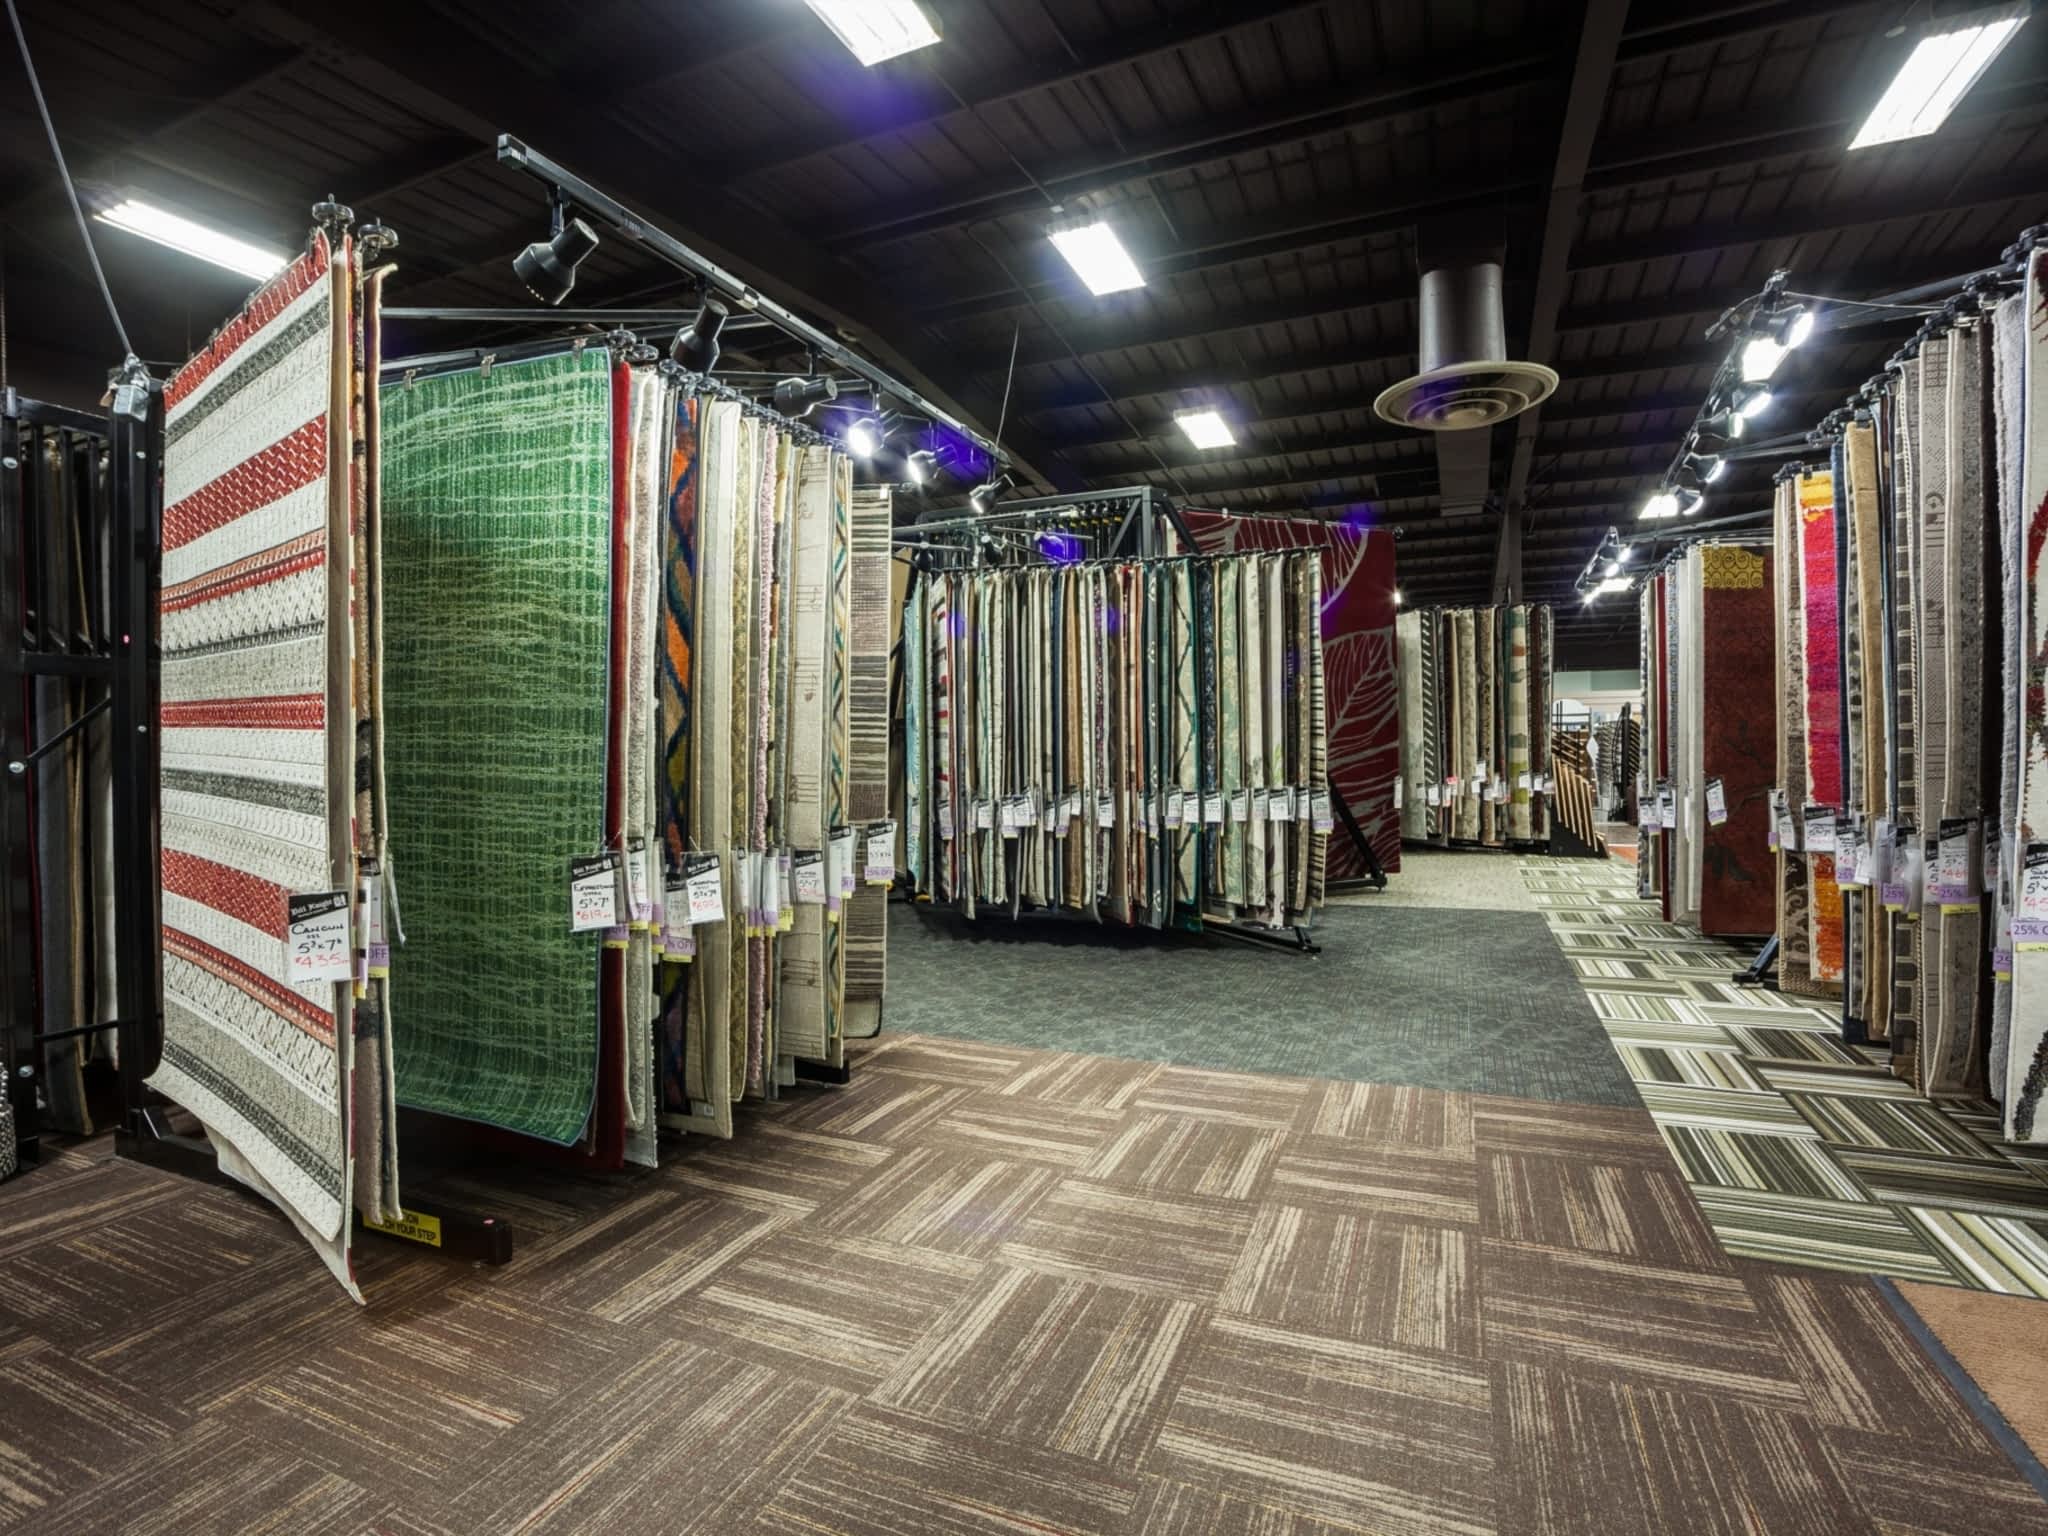 photo Bill Knight Flooring & Carpets Ltd.